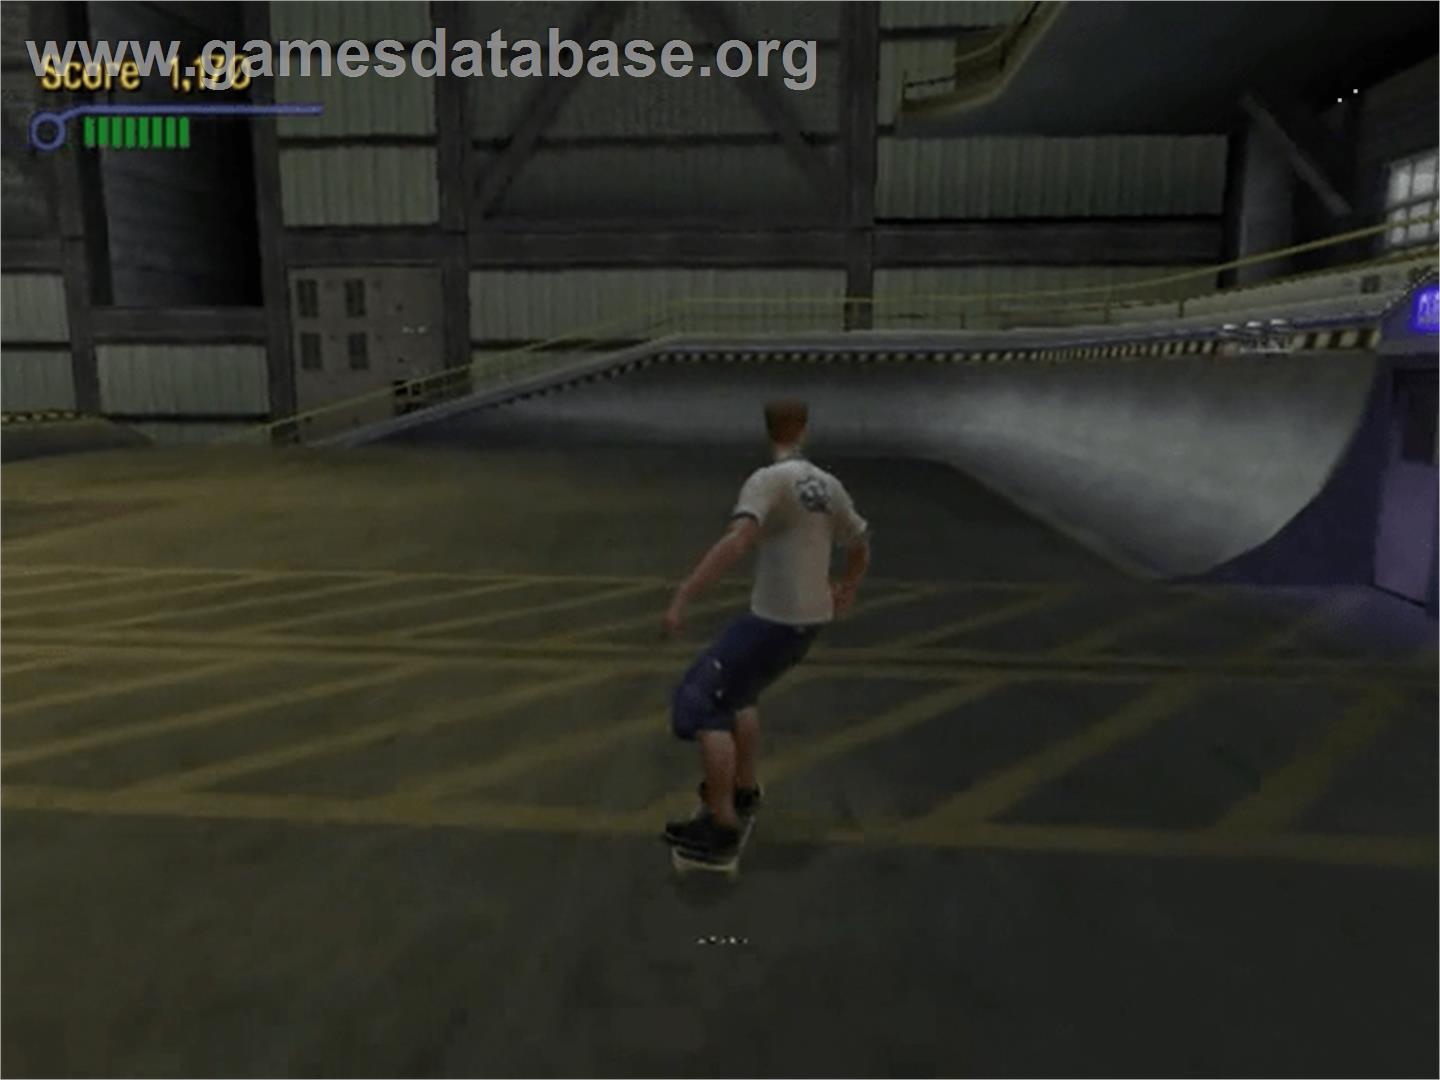 Tony Hawk's Pro Skater 3 - Sony Playstation 2 - Artwork - In Game